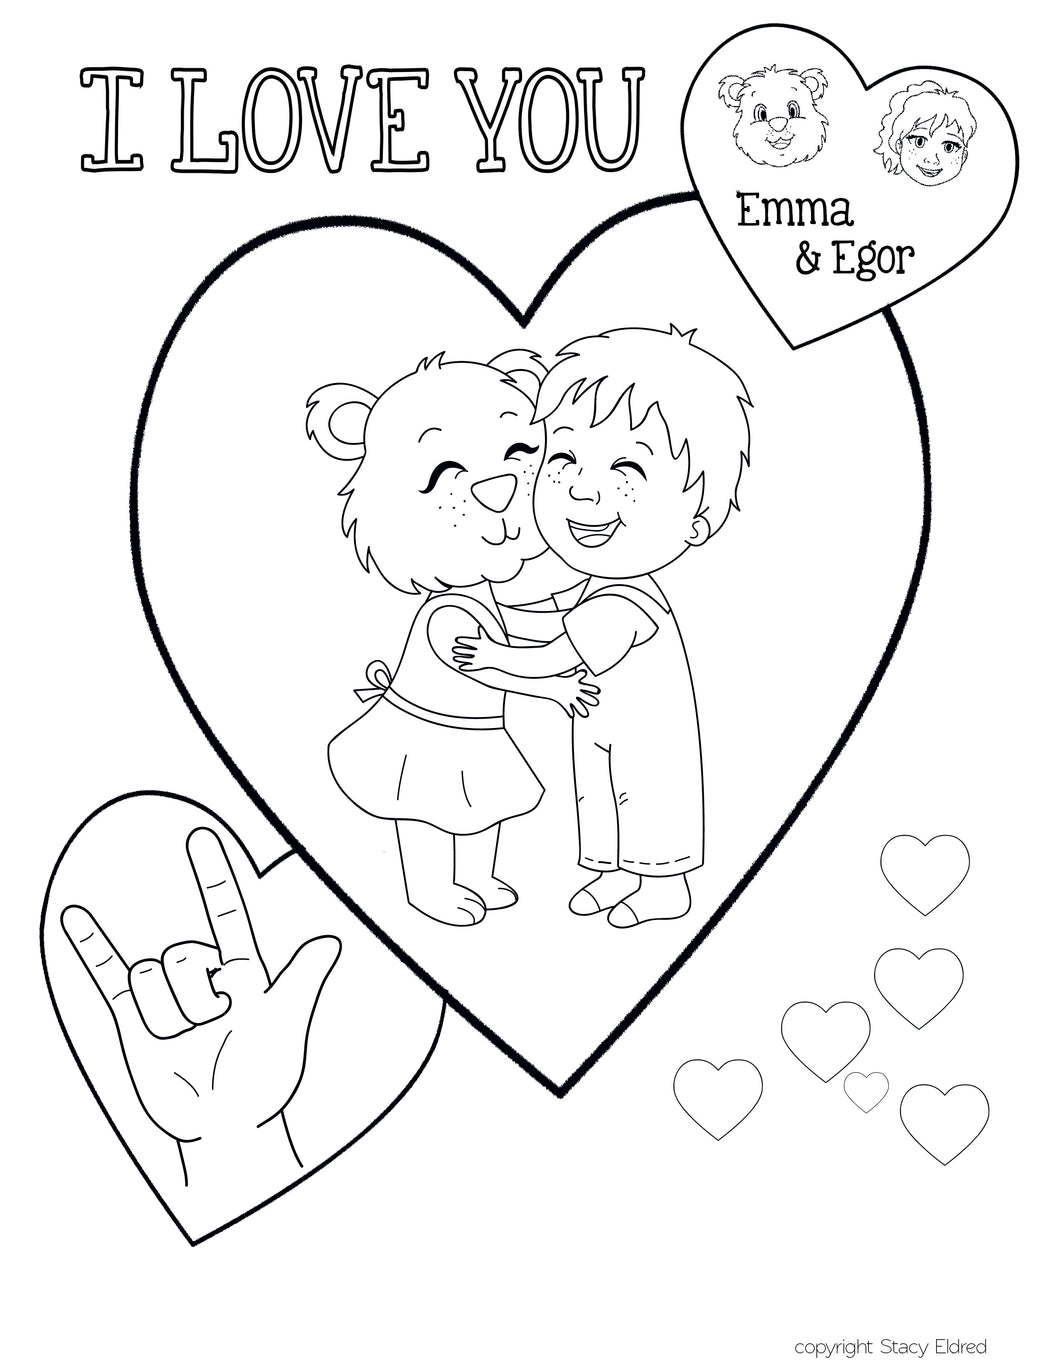 February-Print at Home-Valentine-Coloring Pages-Coloring Book-Emma & Egor-Emma & Egor